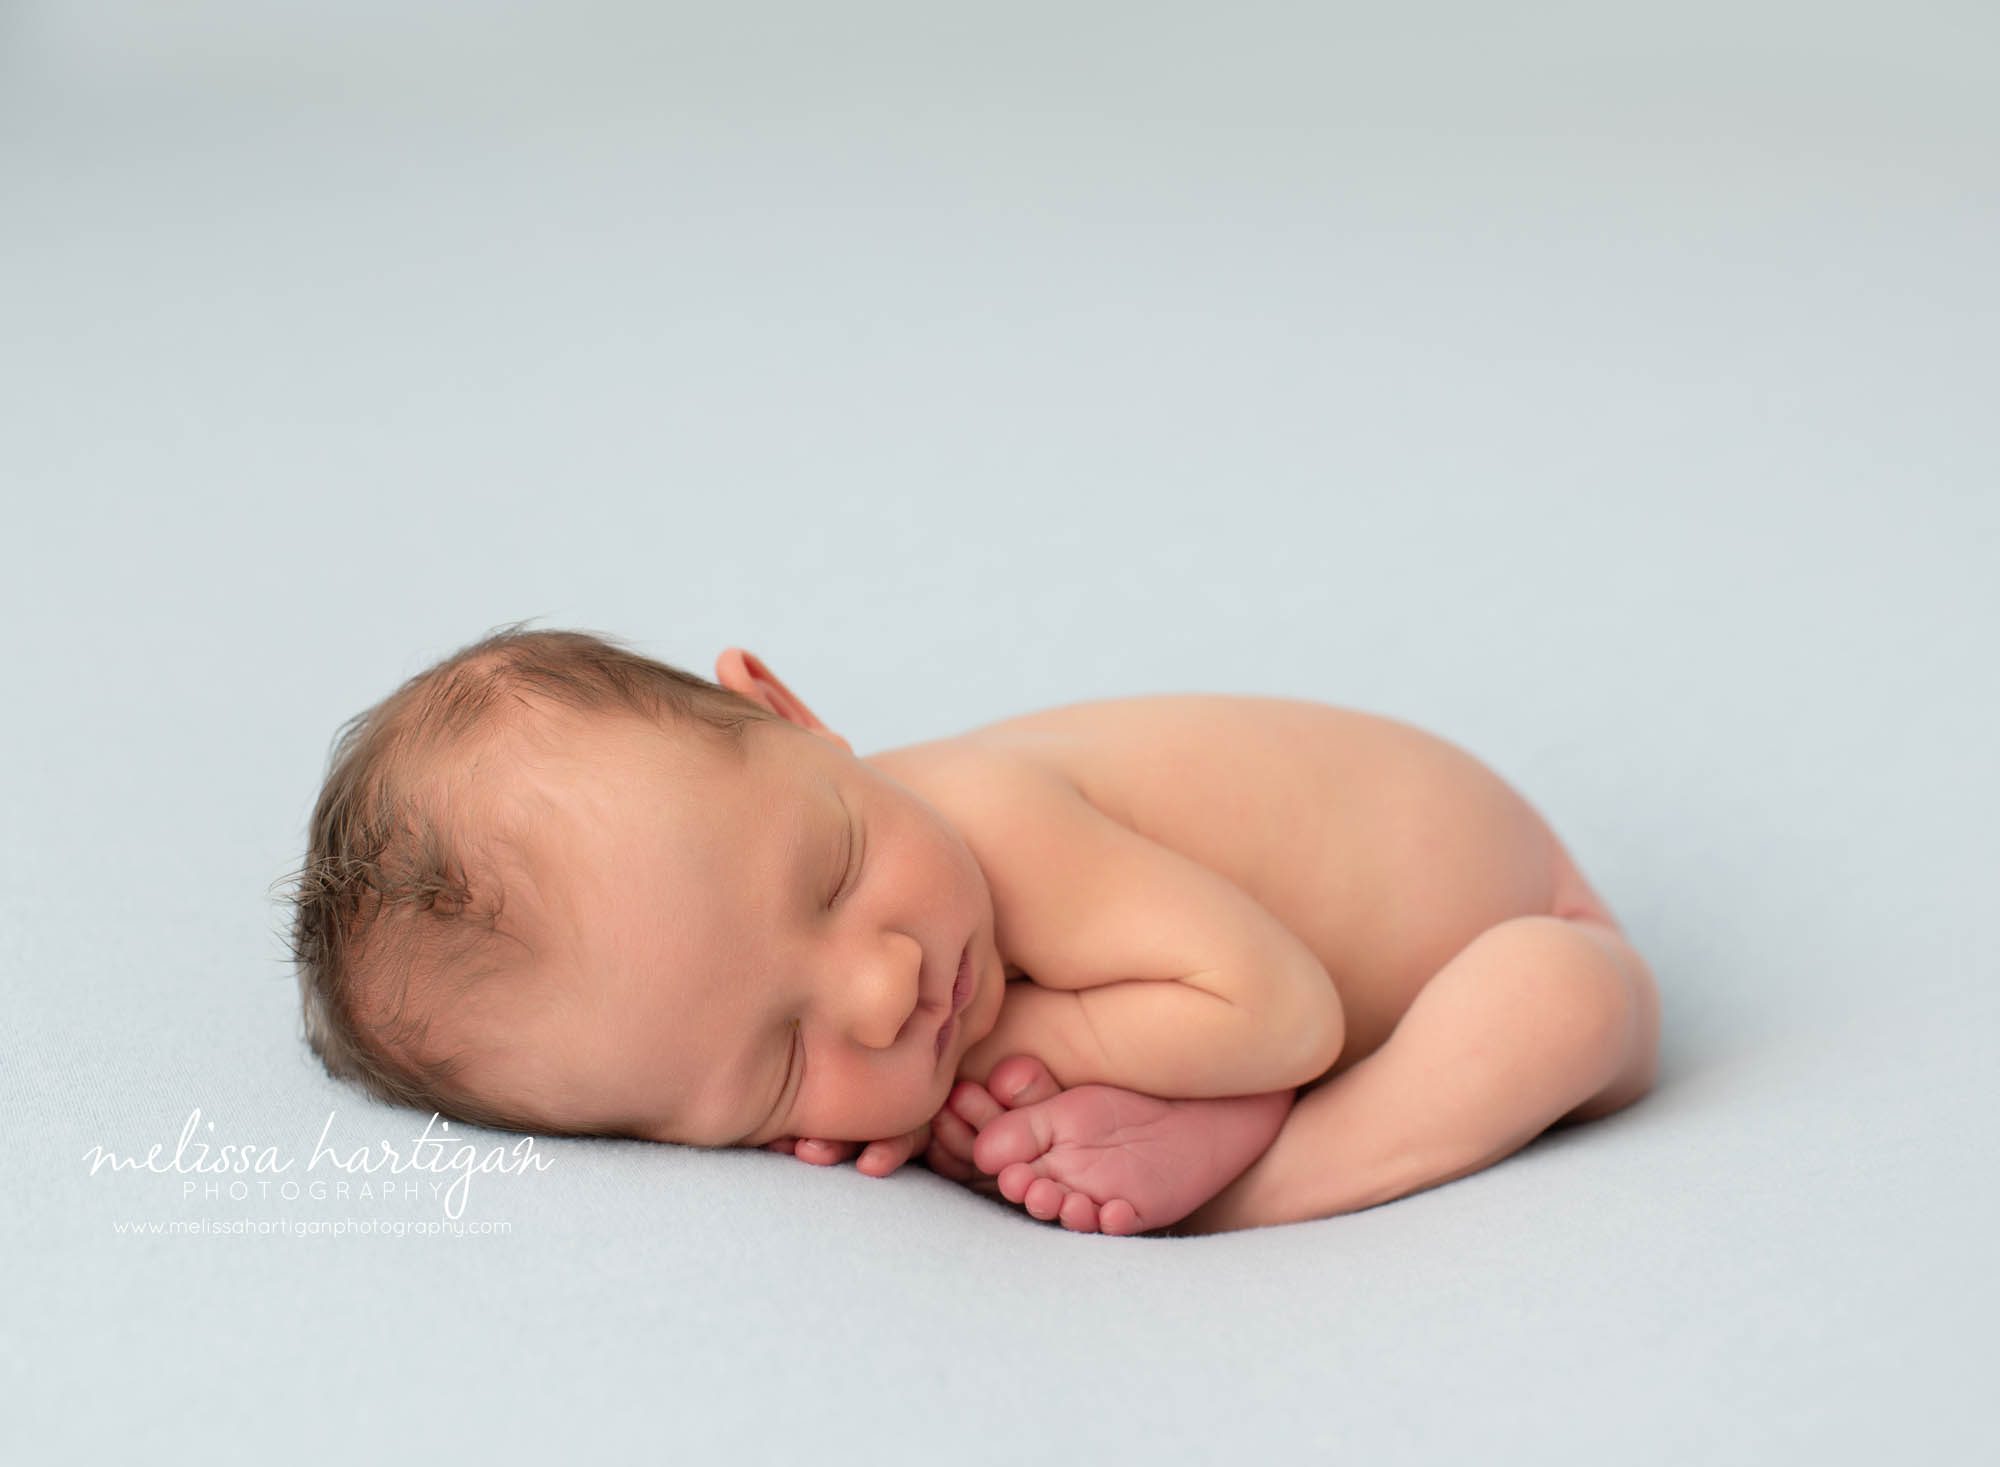 Newborn baby boy taco pose on light blue backdrop studio newborn photography session